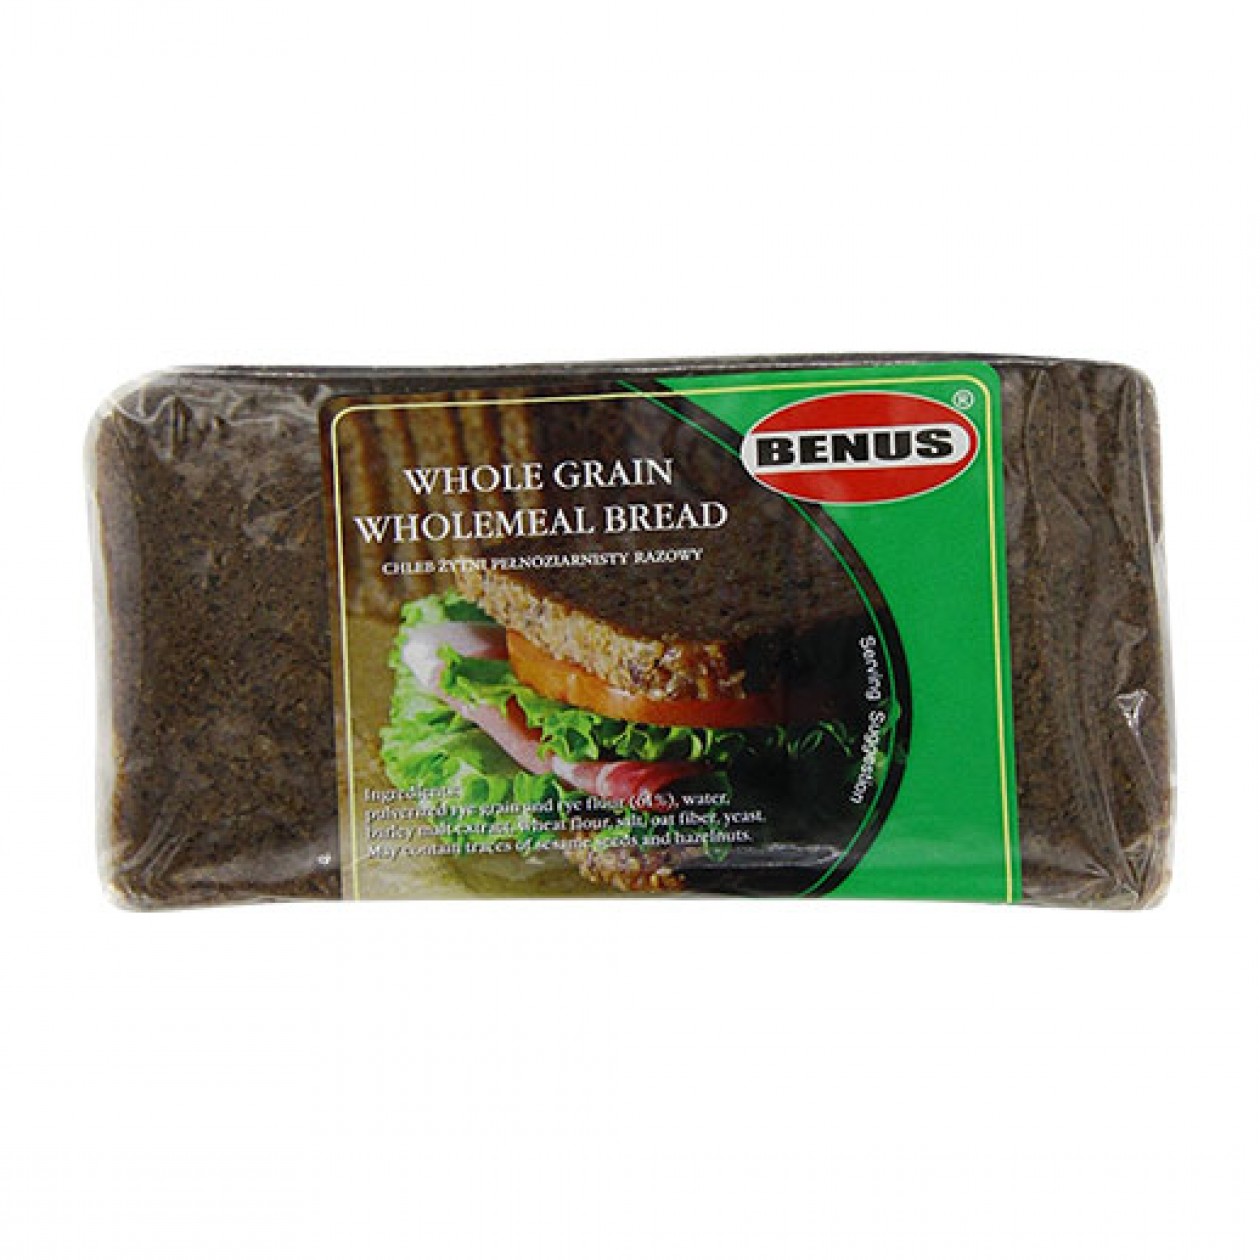 Benus Whole Rye Wholemeal Bread 12x500g